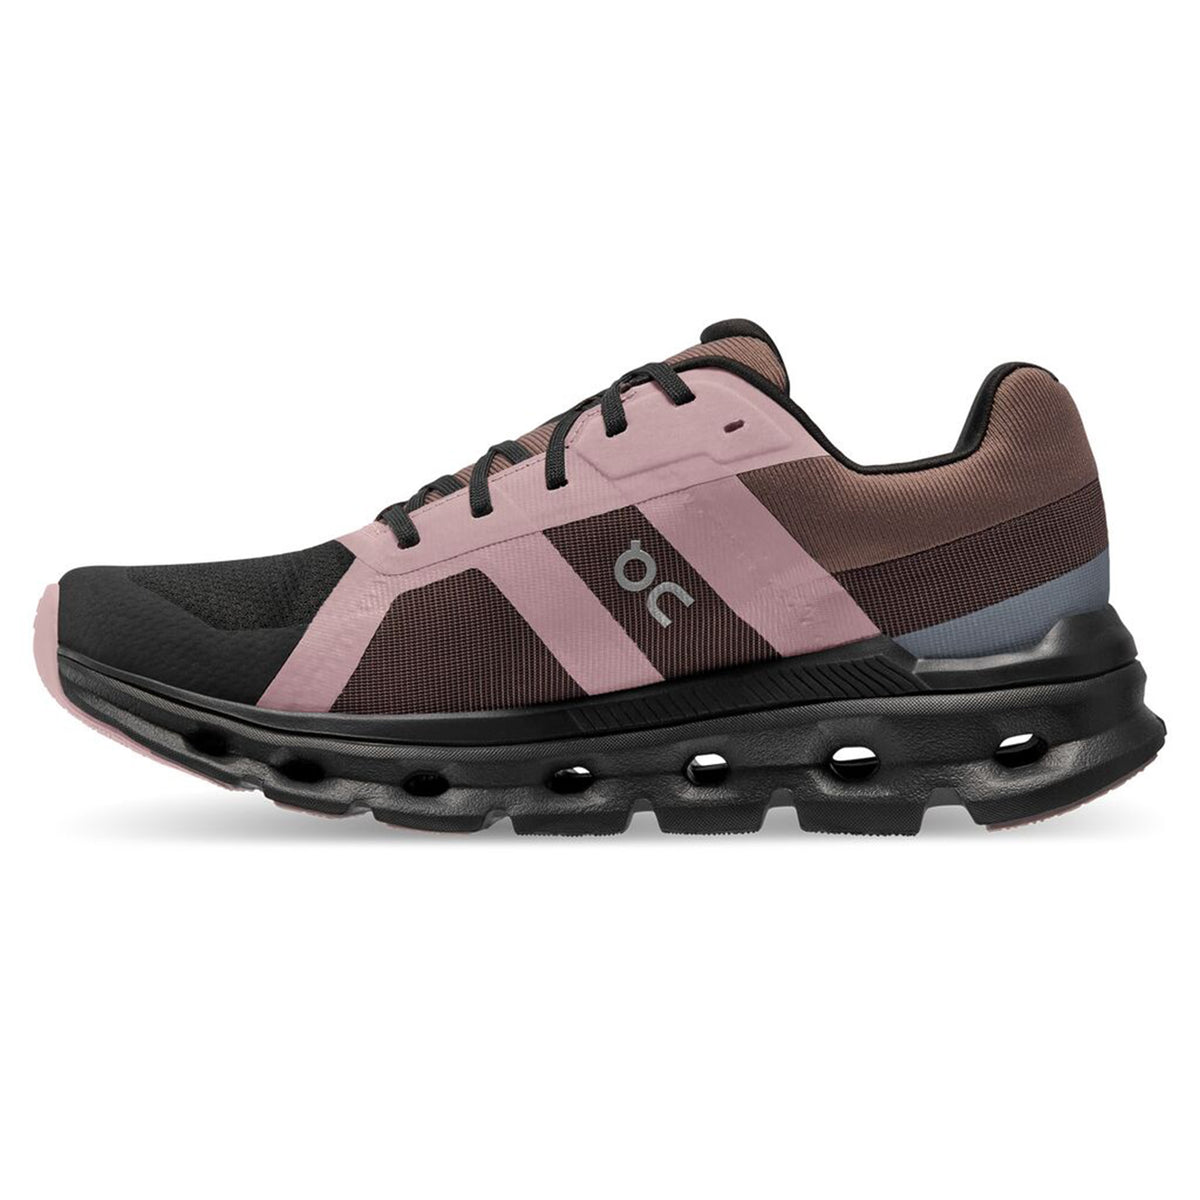 On Cloudrunner Waterproof Womens Running Shoes: Black/Grape